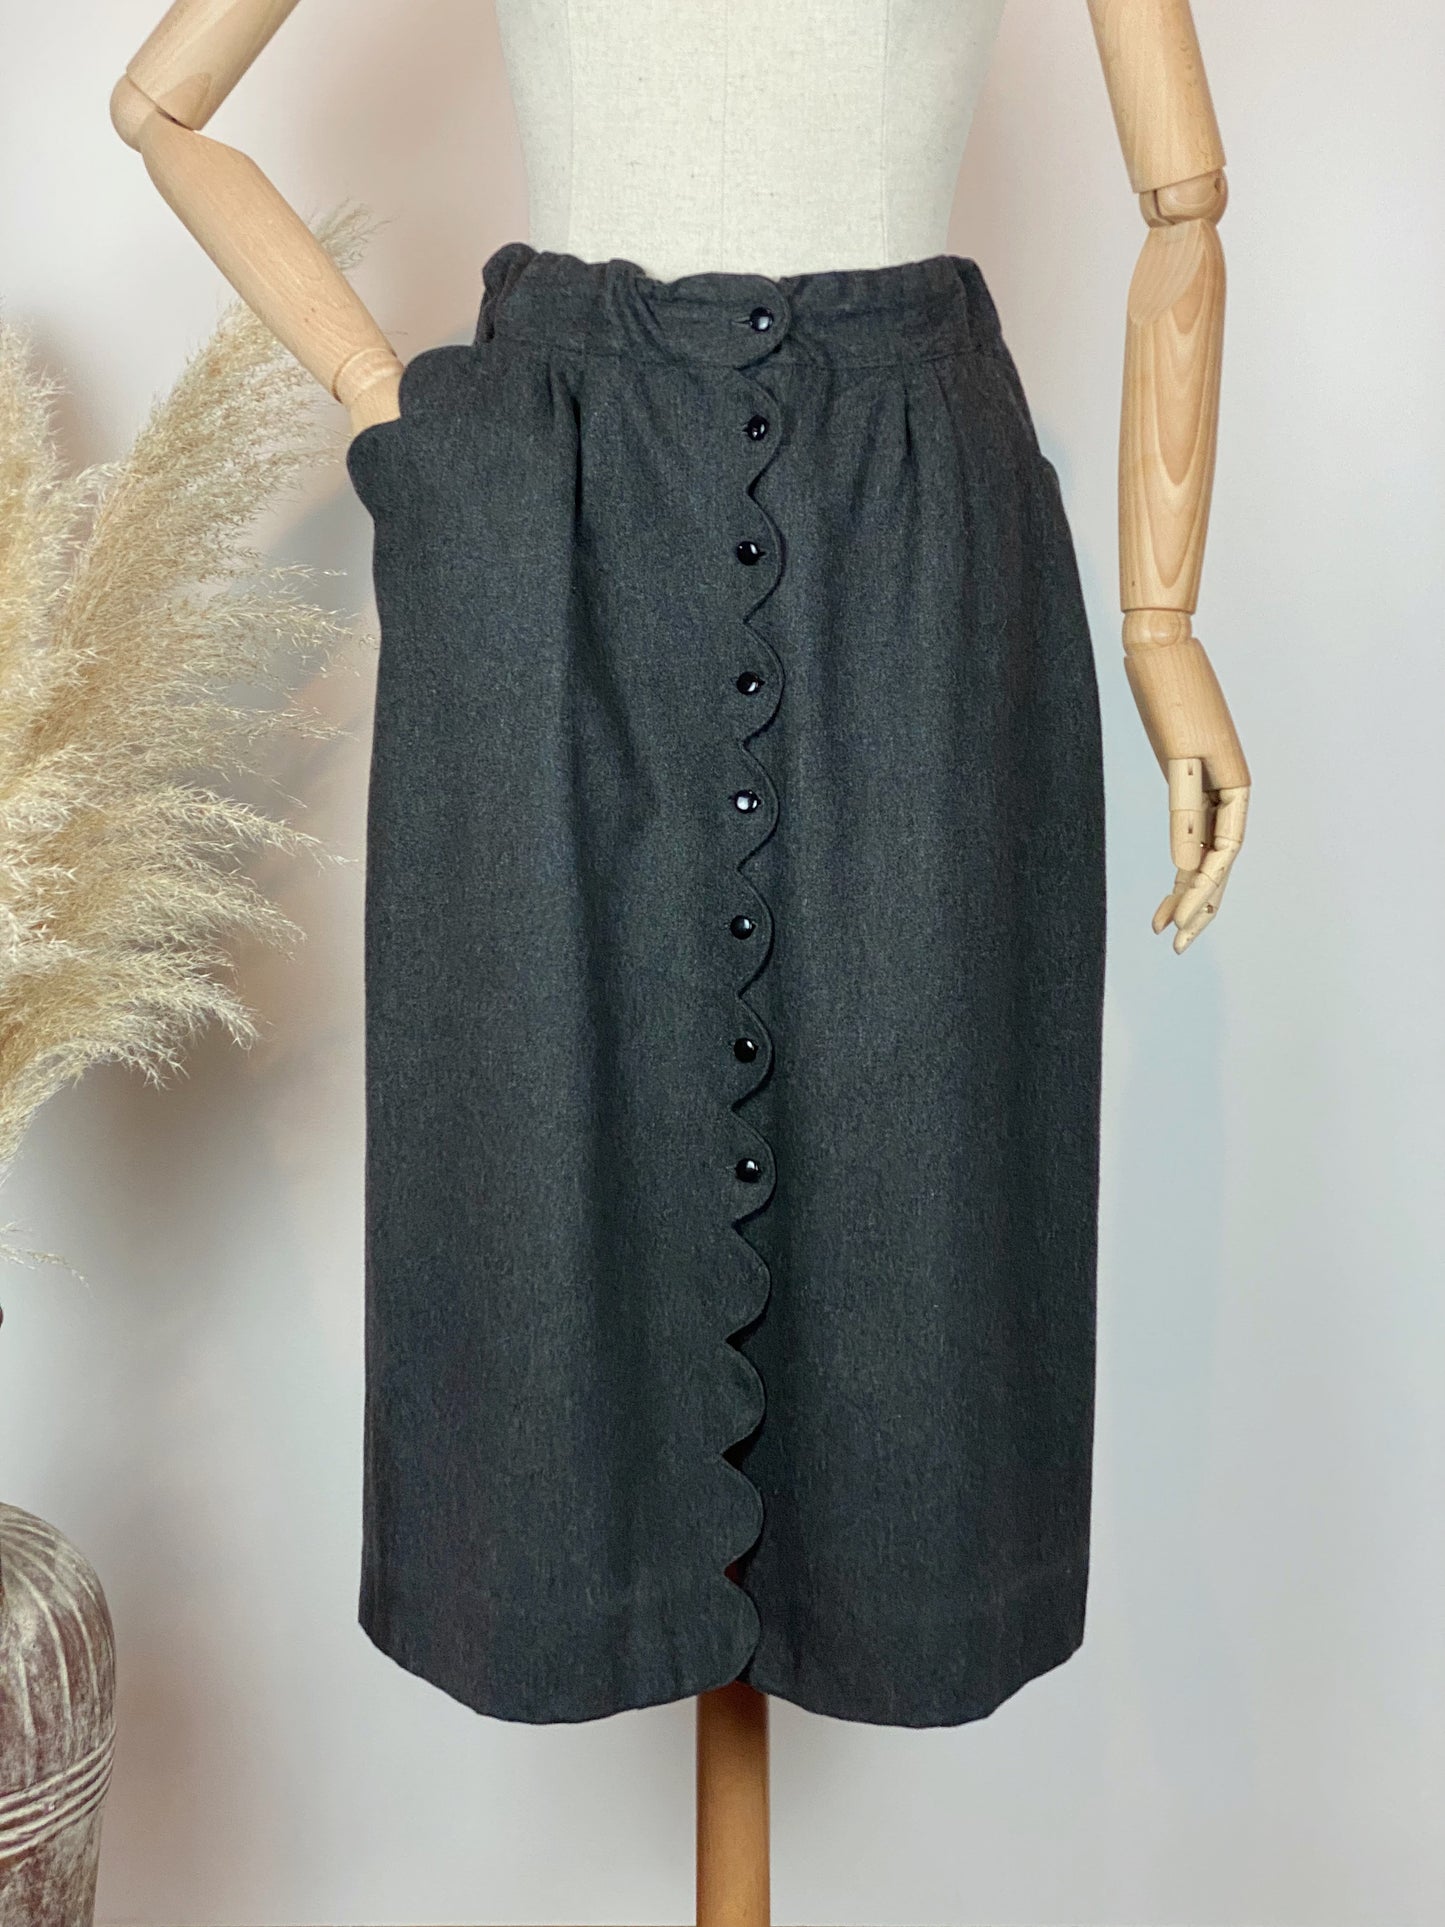 Reworked Vintage Pencil Skirt